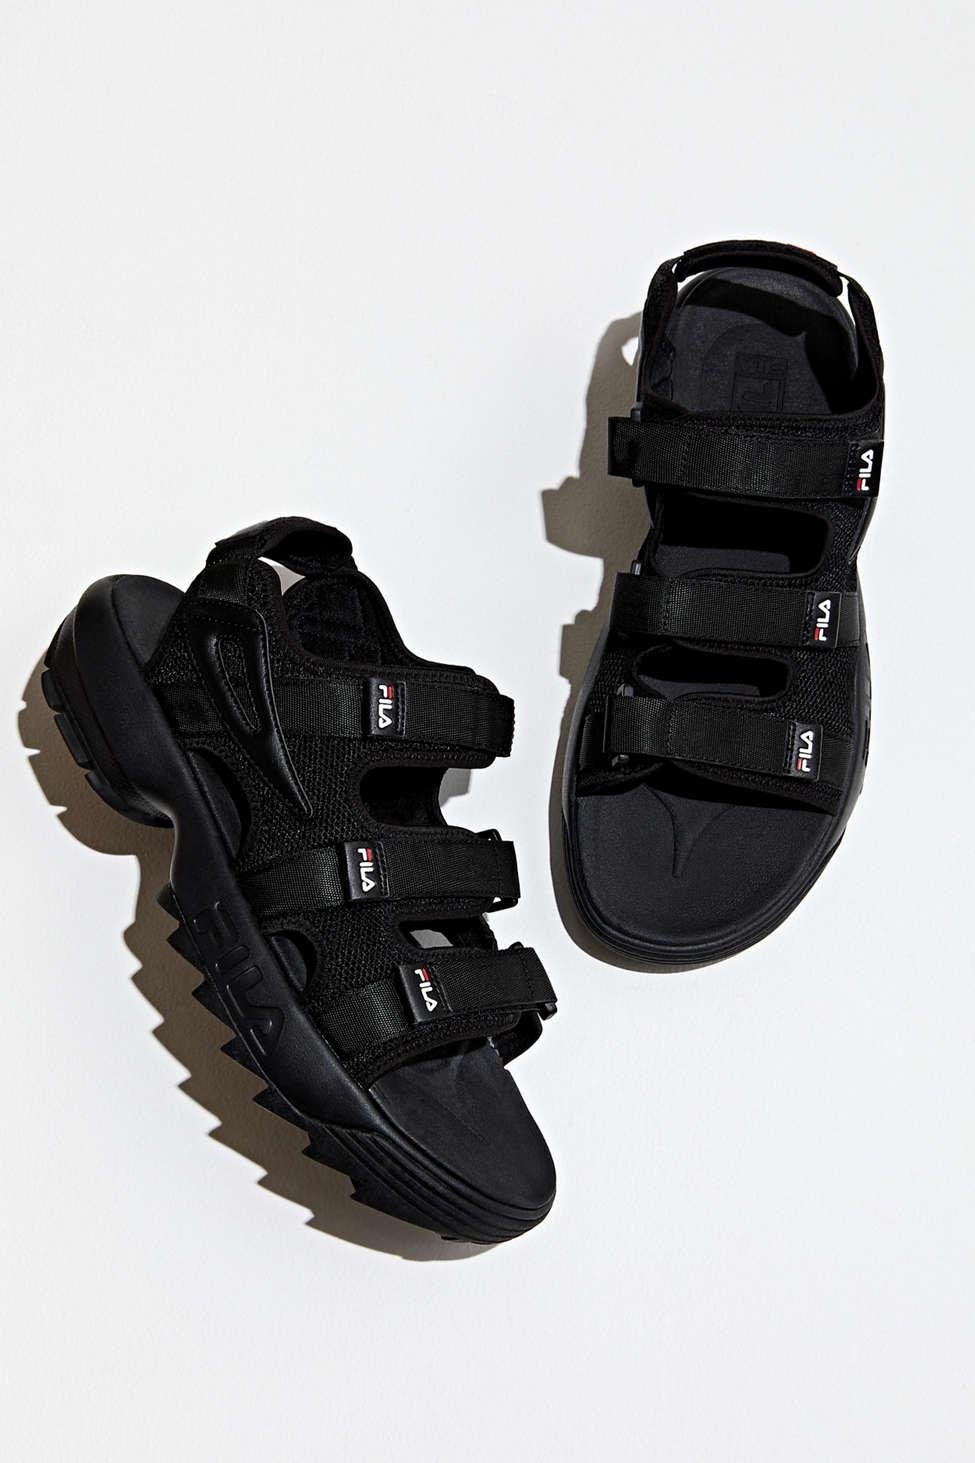 Fila Sandals Disruptor Black Outlet, SAVE 59% - aveclumiere.com